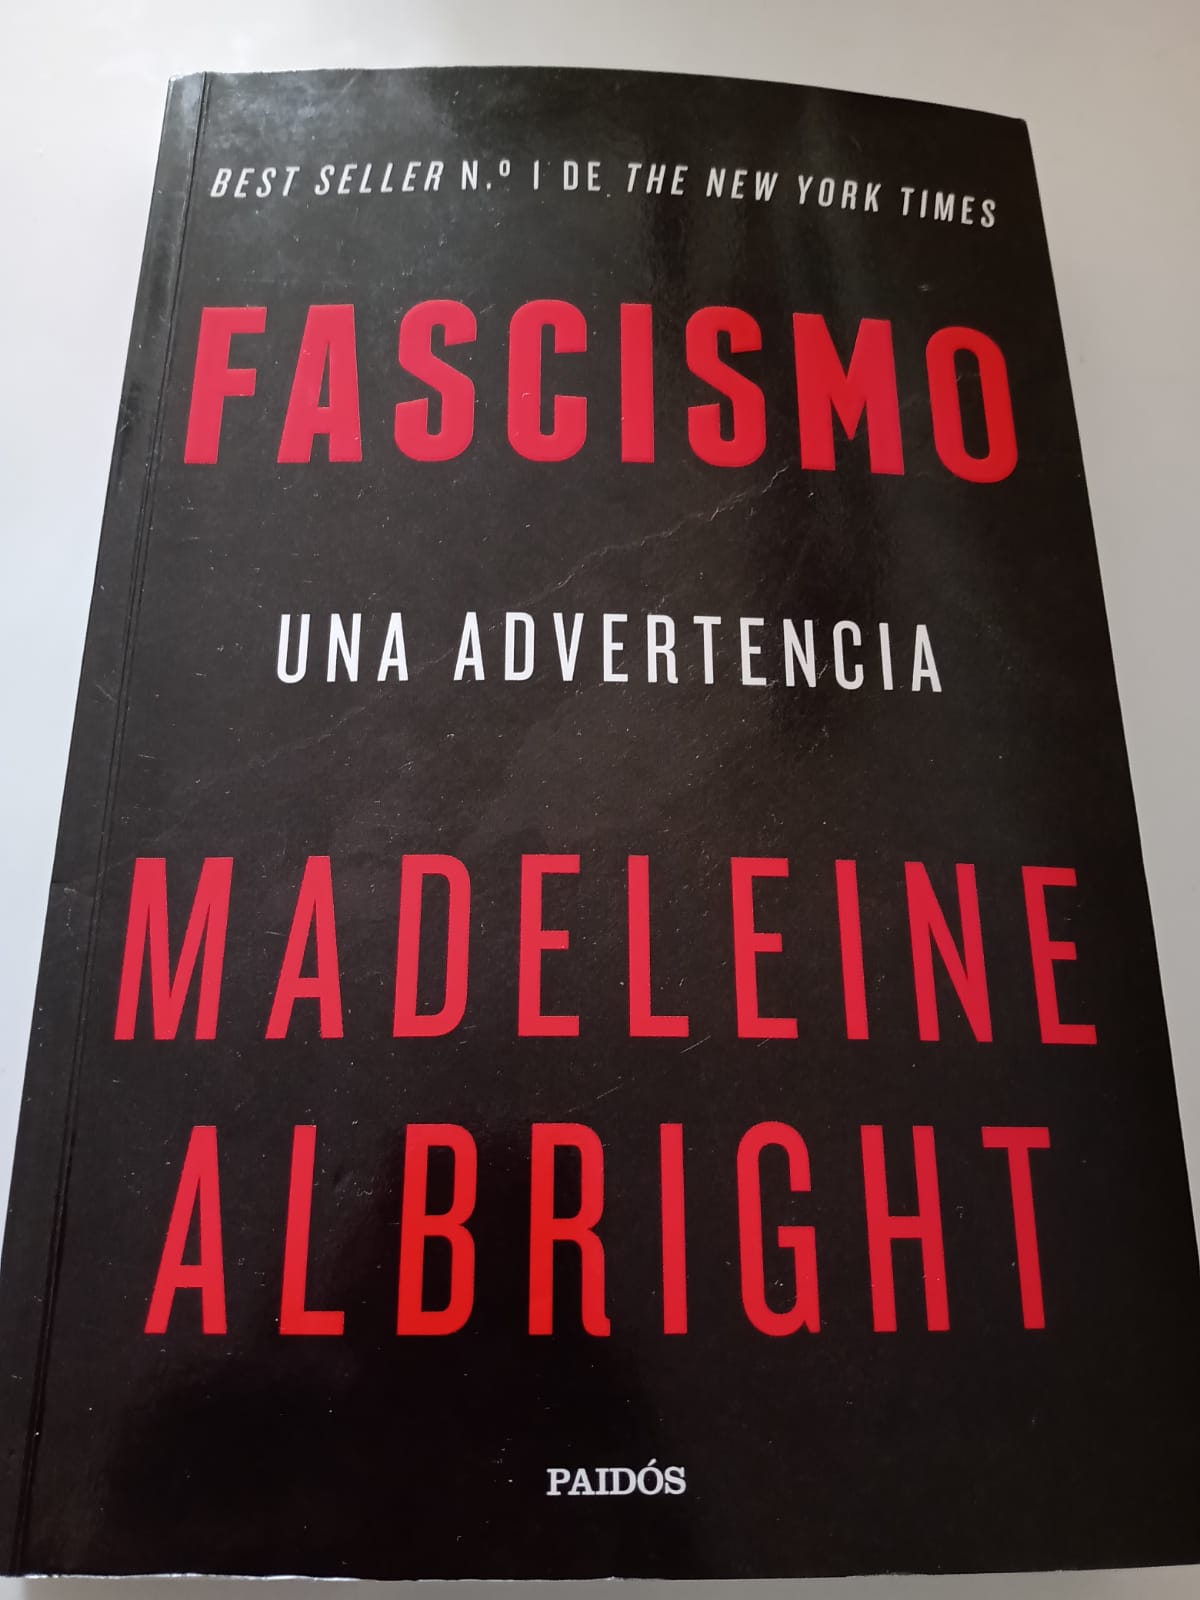 “Fascismo: una advertencia” por Madeleine Albright*